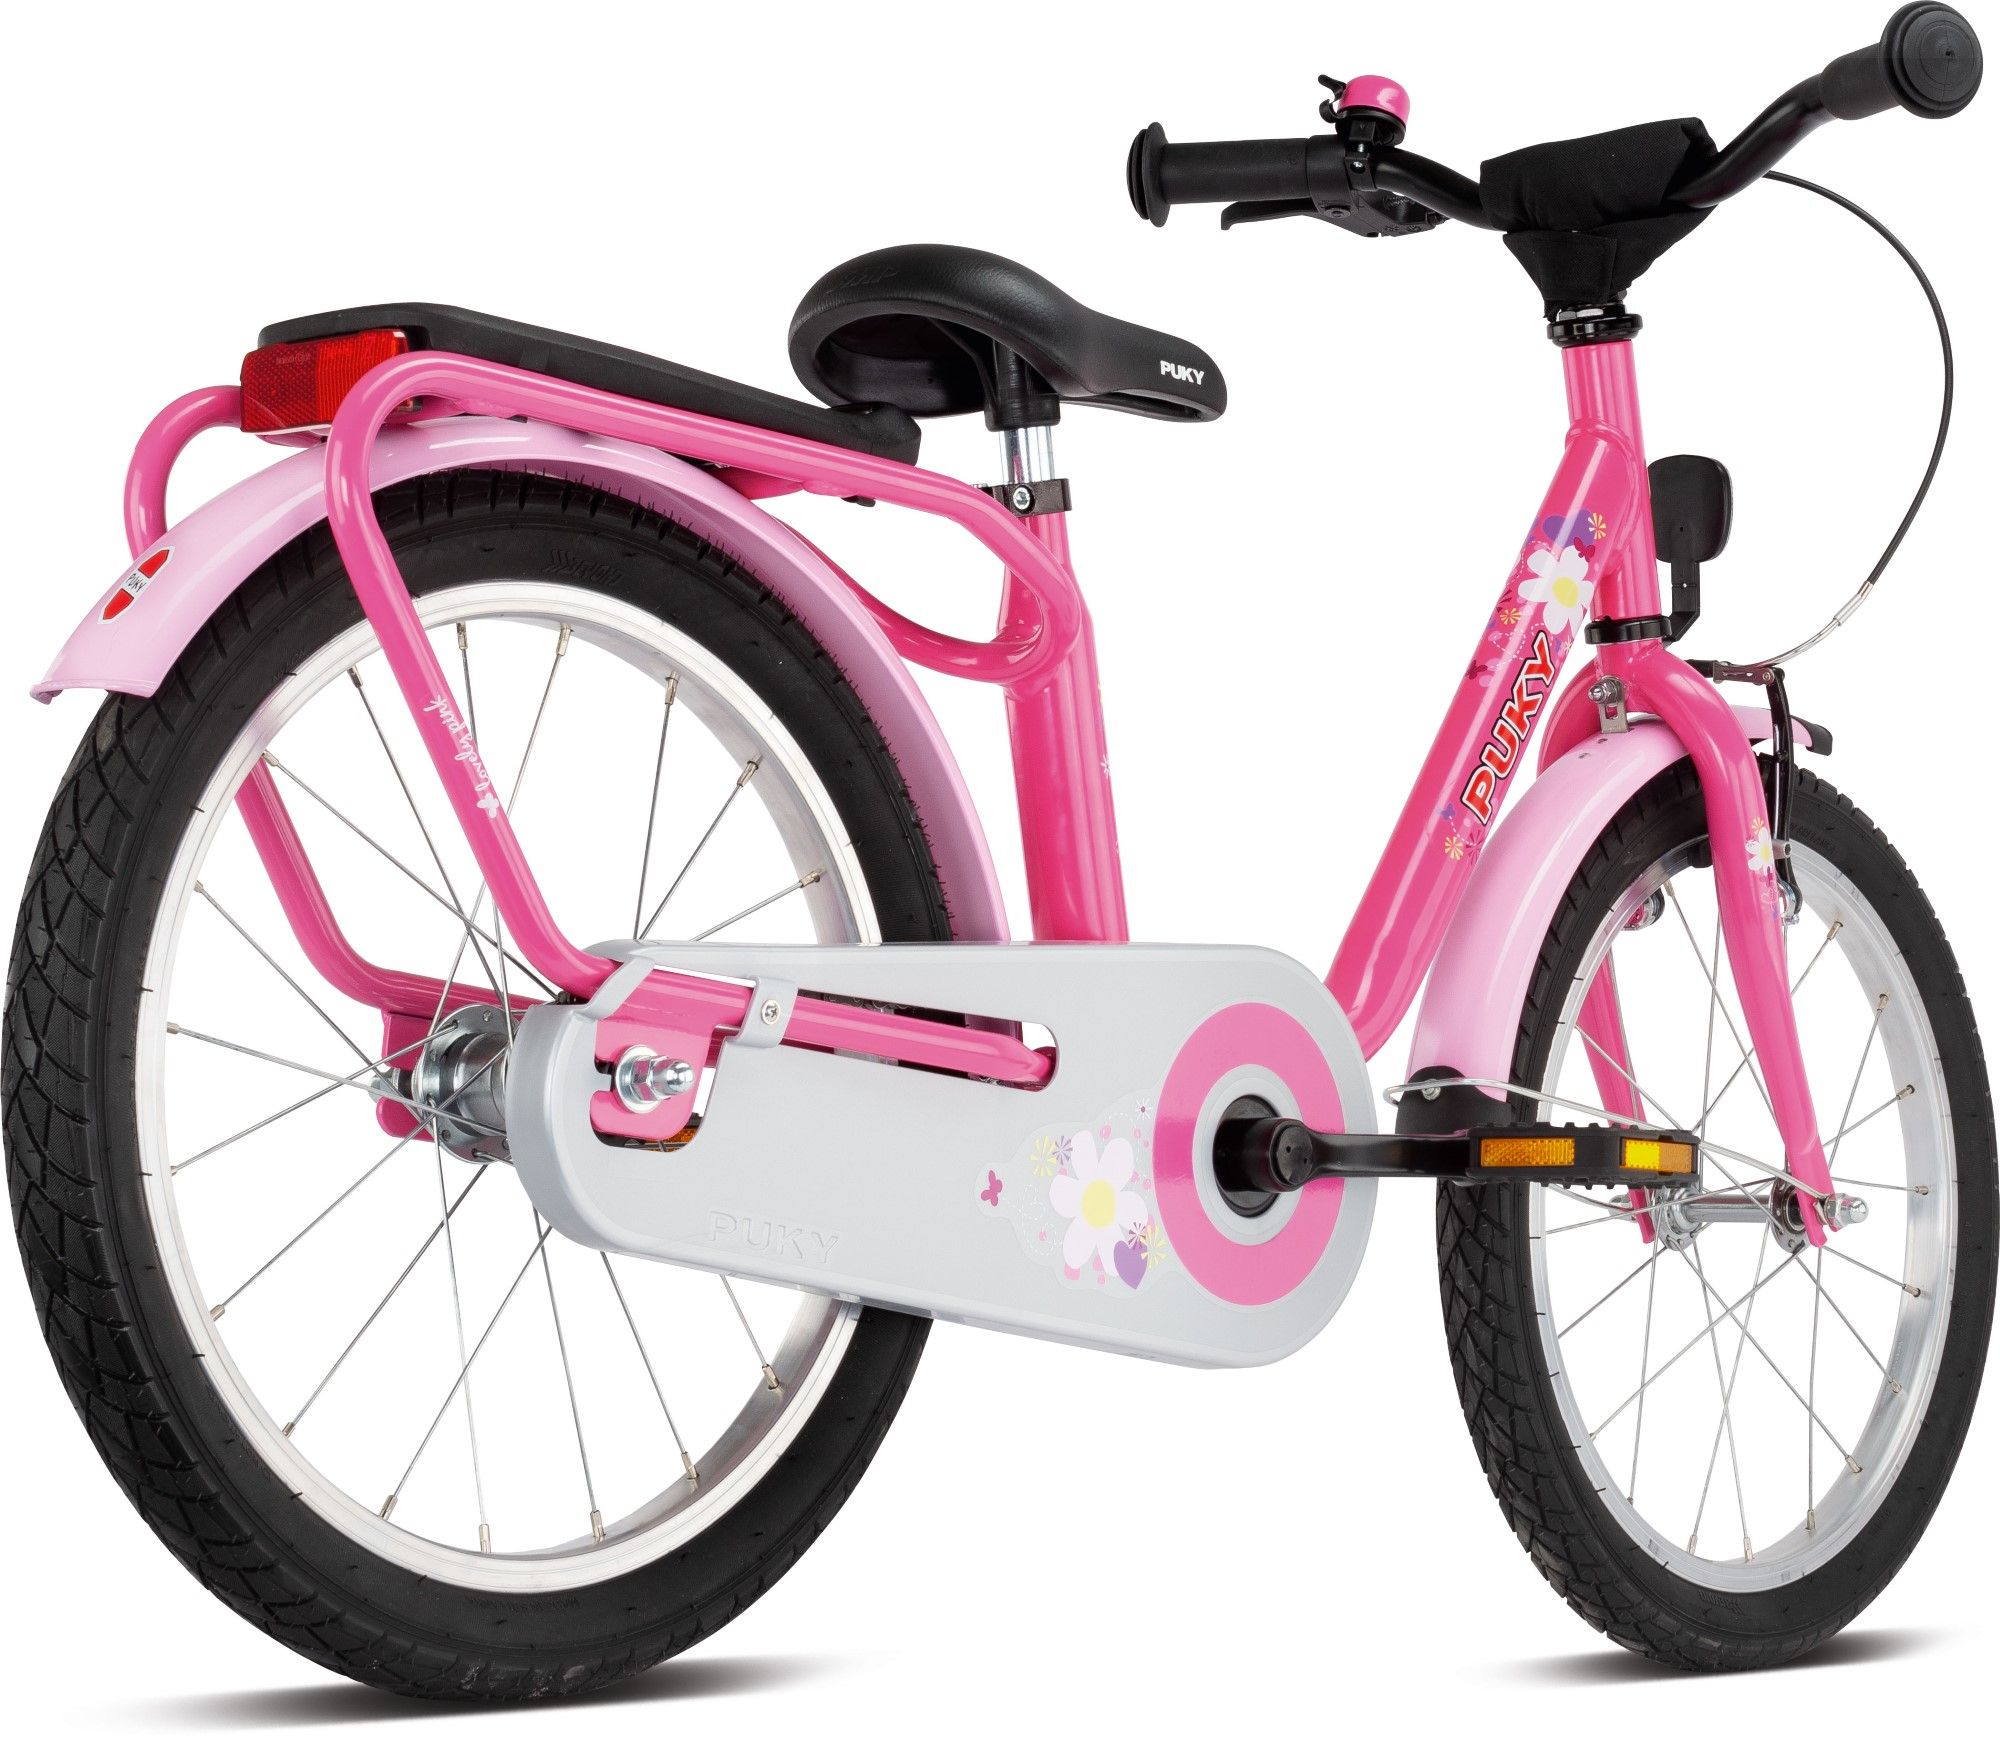 Puky STEEL 18 lovely pink - Fahrrad Online Shop